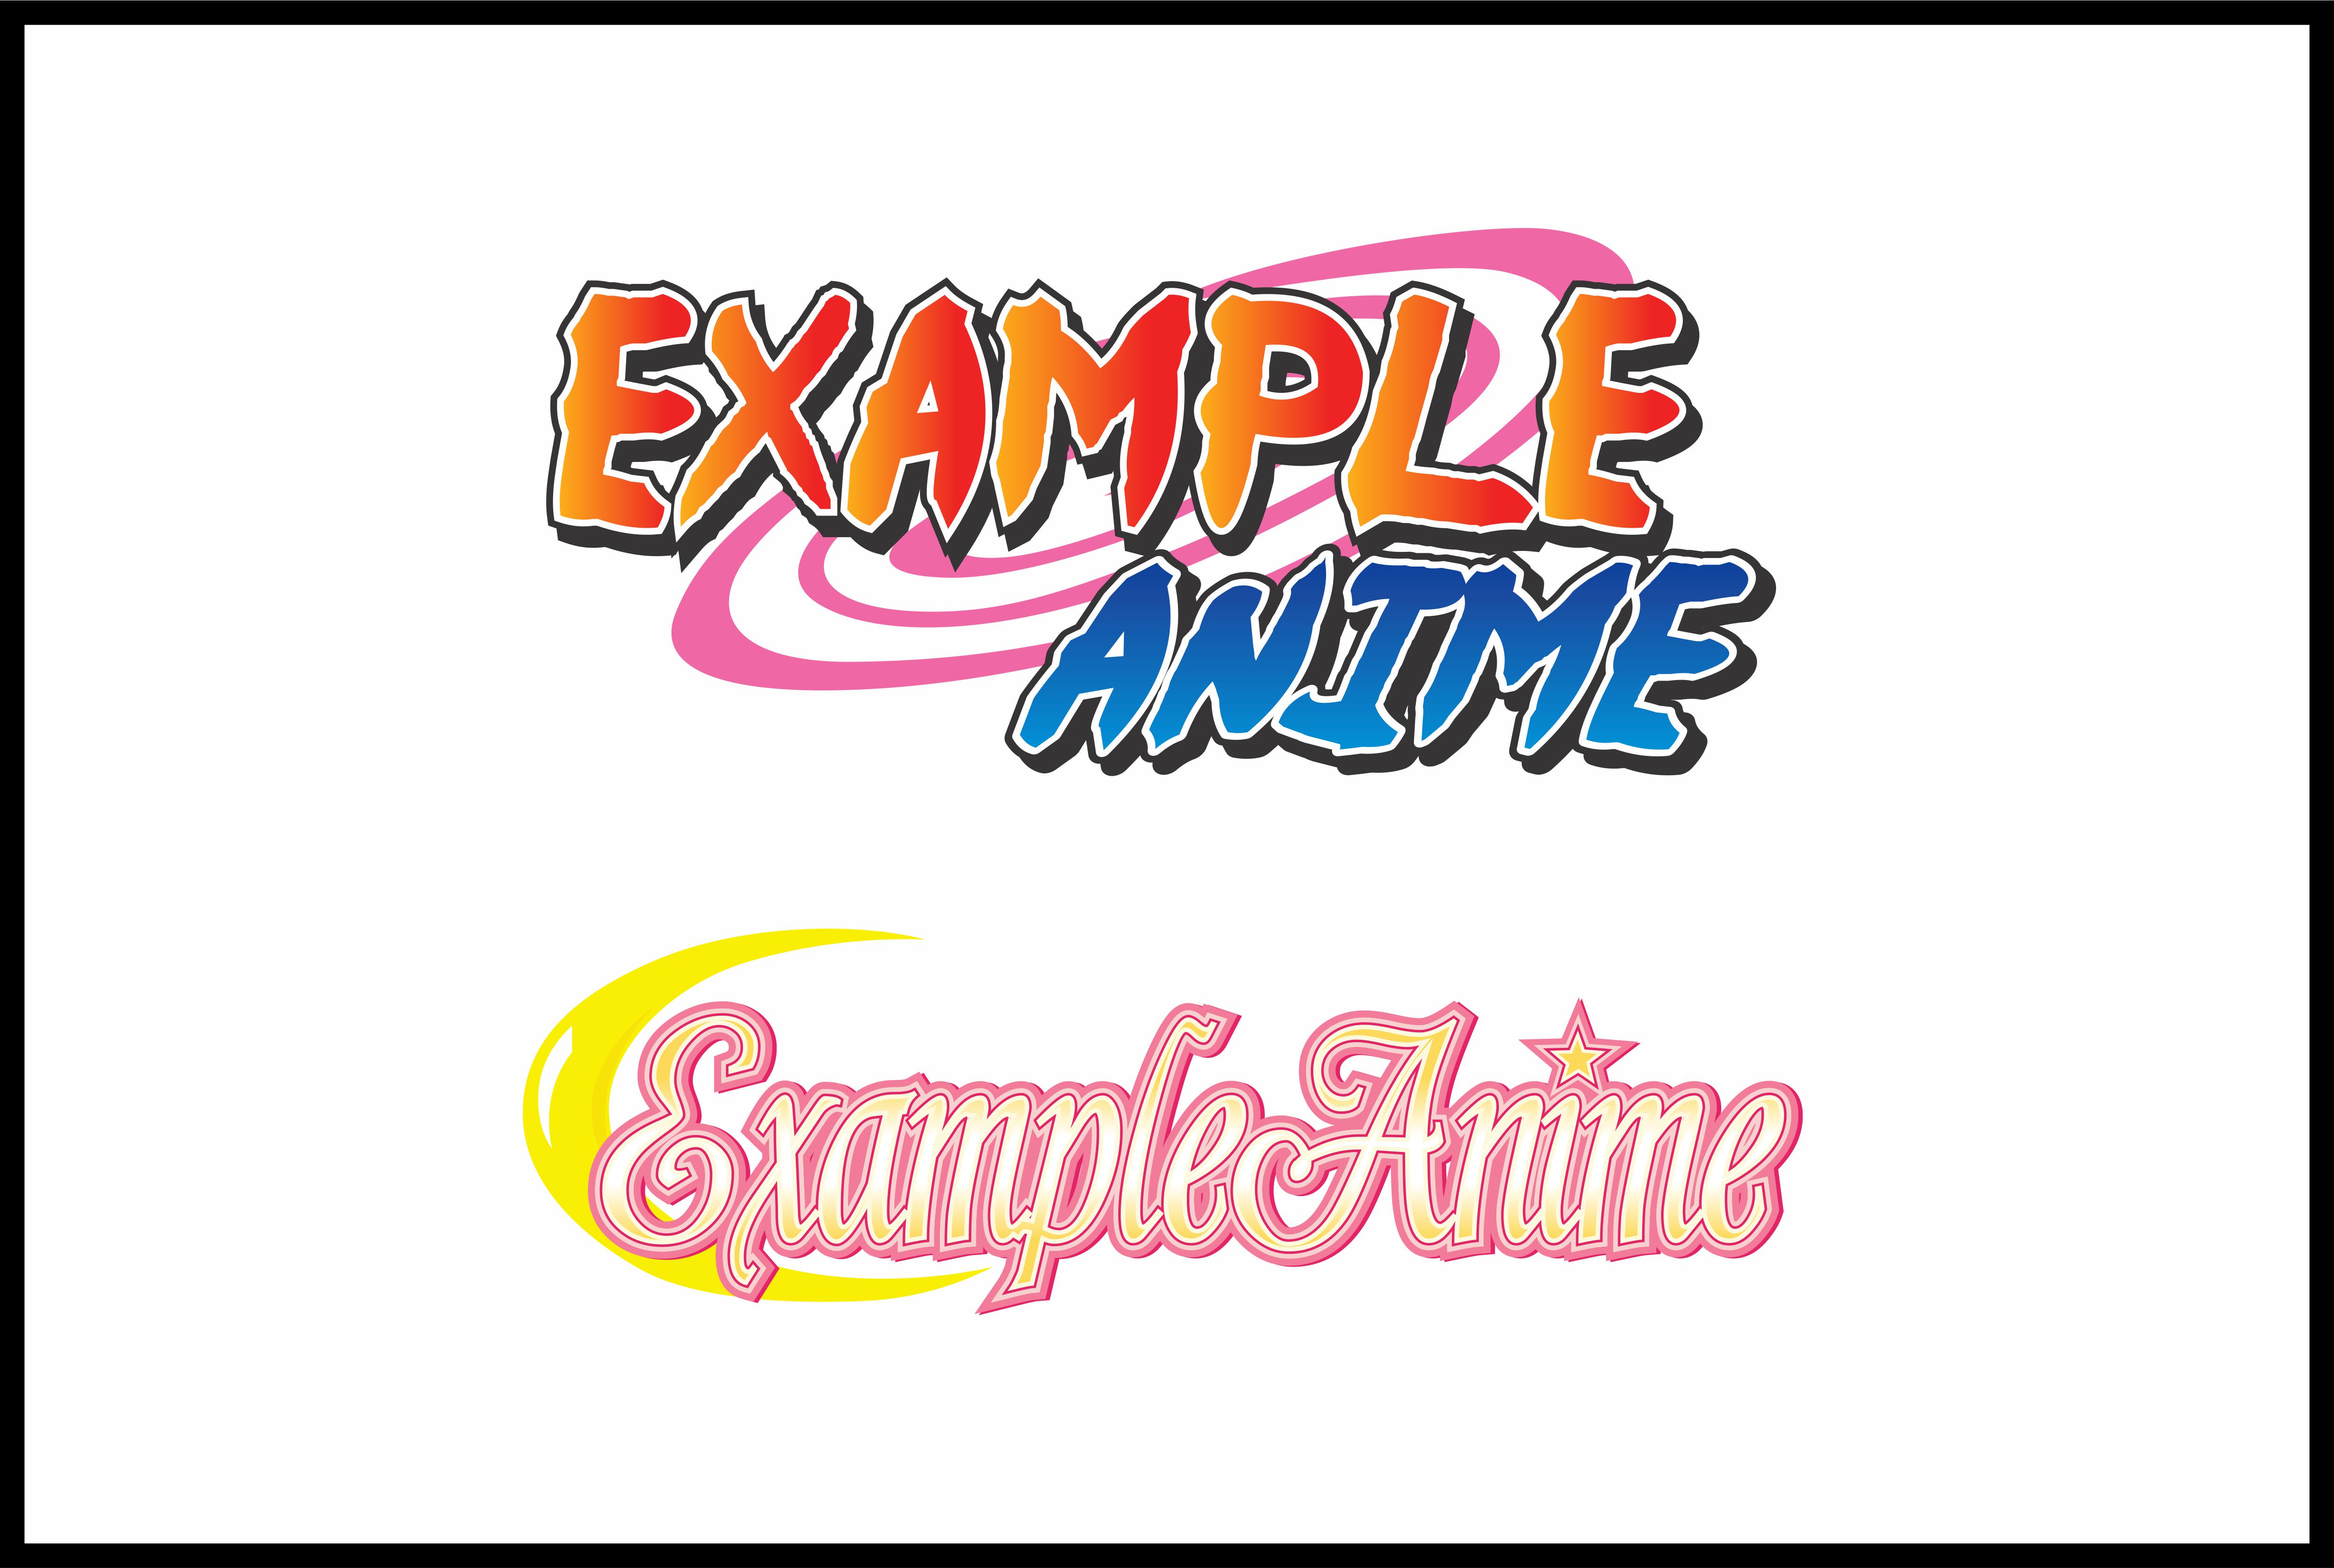 Famous Anime Logos of 2022 | BrandCrowd blog